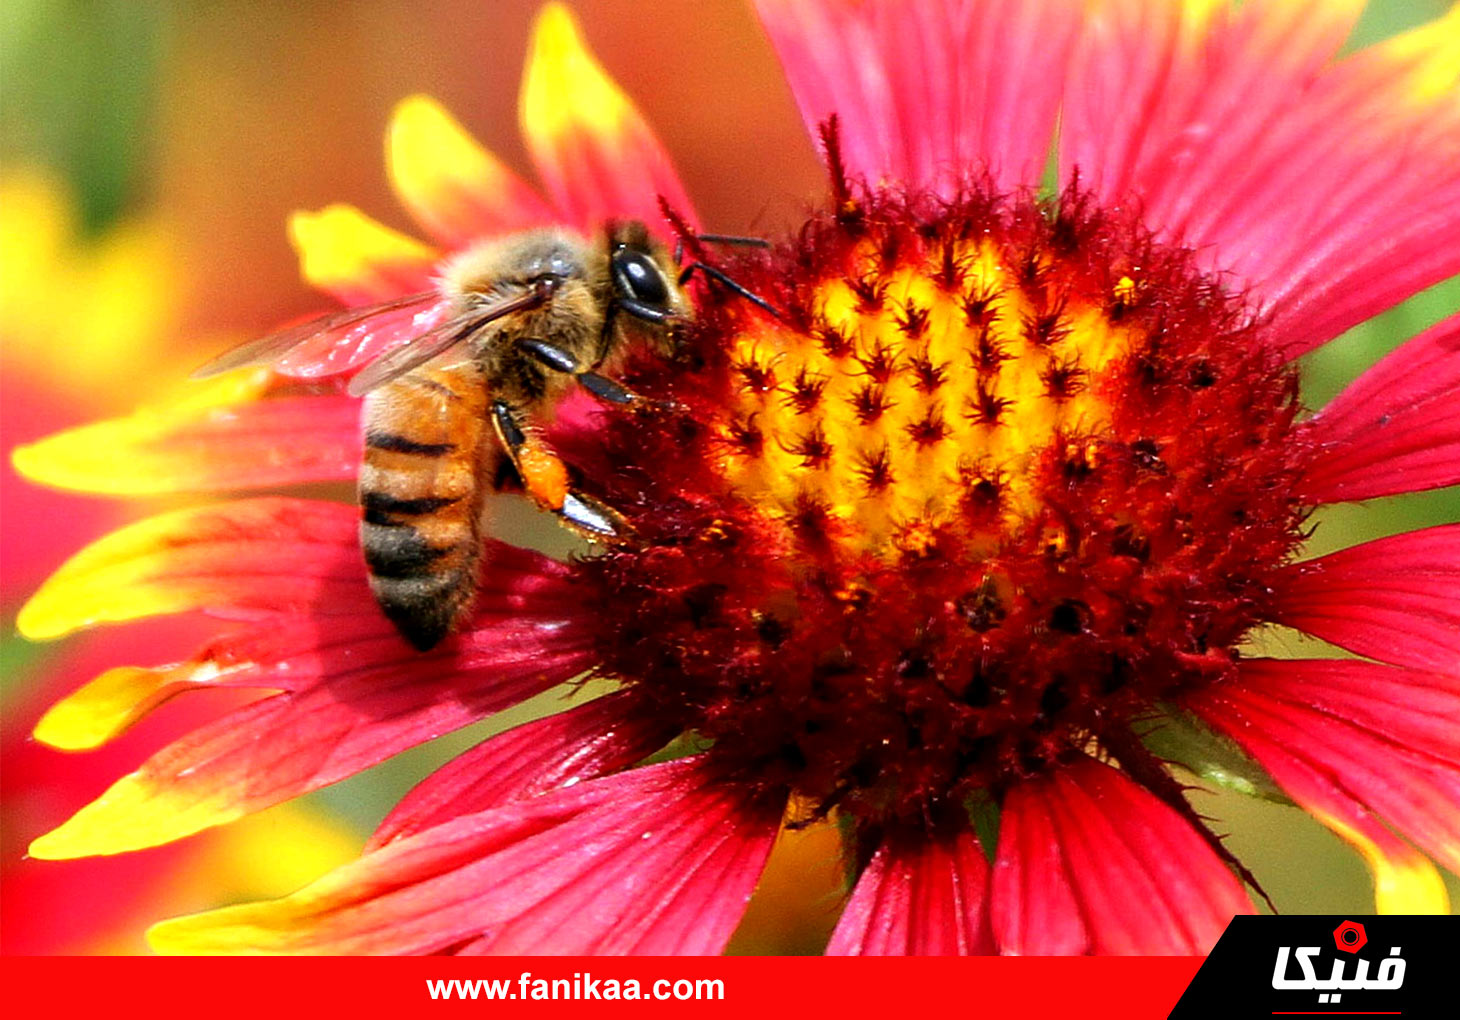 آموزش پرورش زنبور عسل